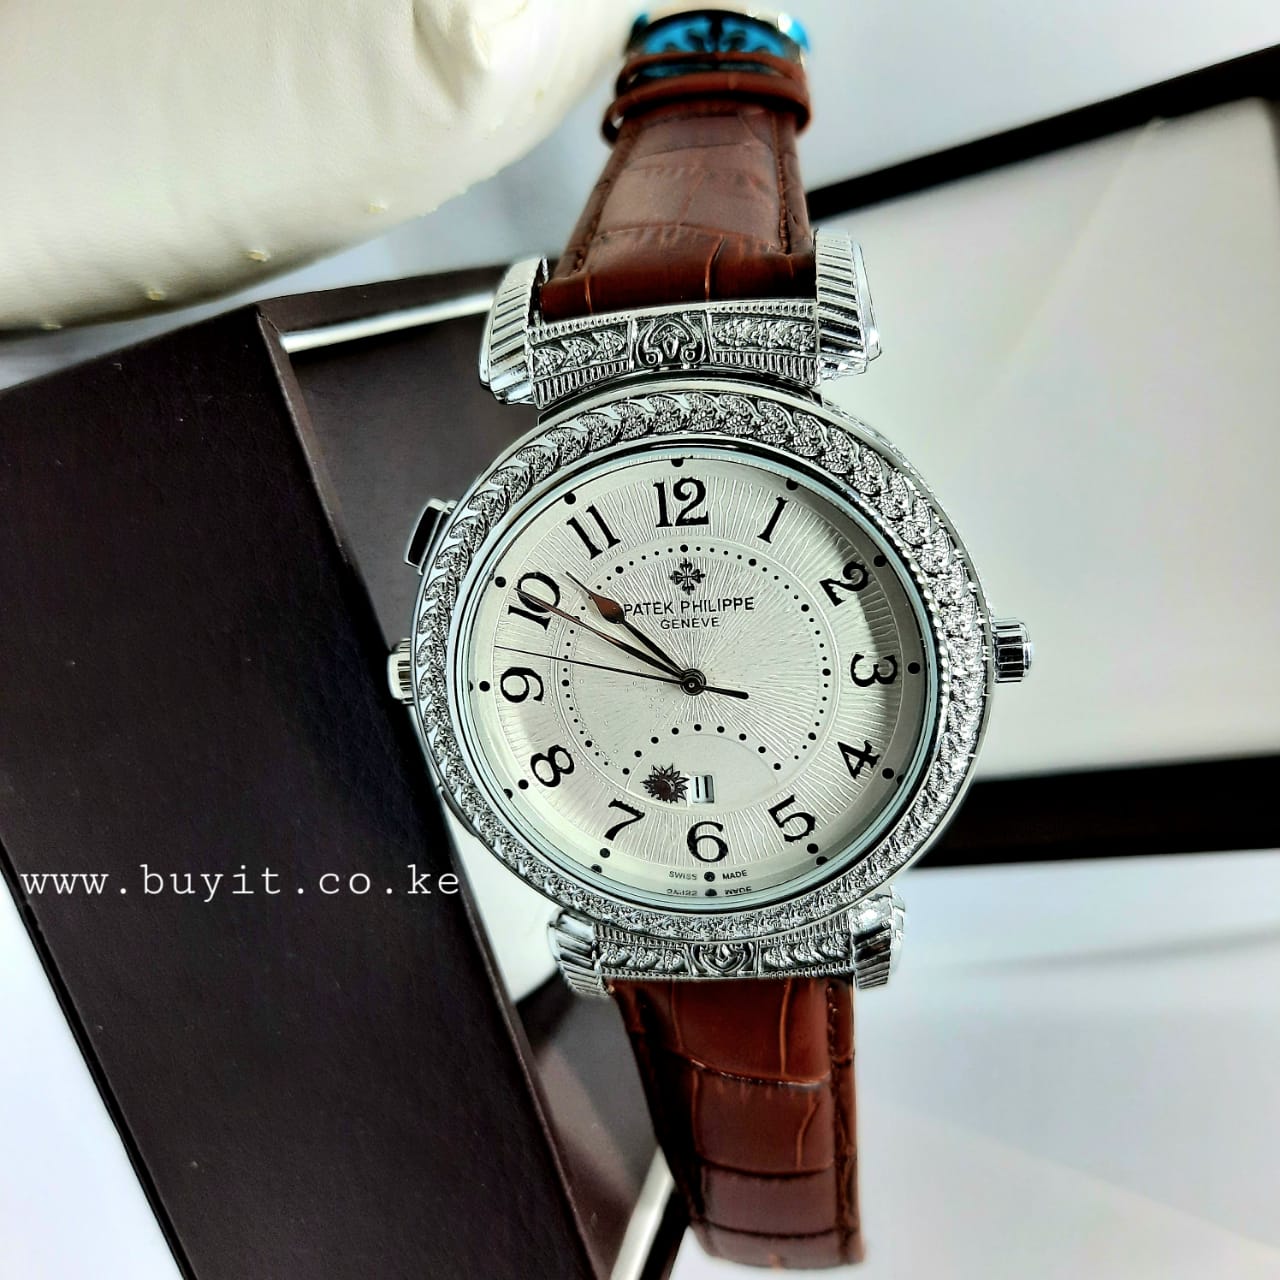 Double-faced Patek Chronograph Timepiece for Men 45mm